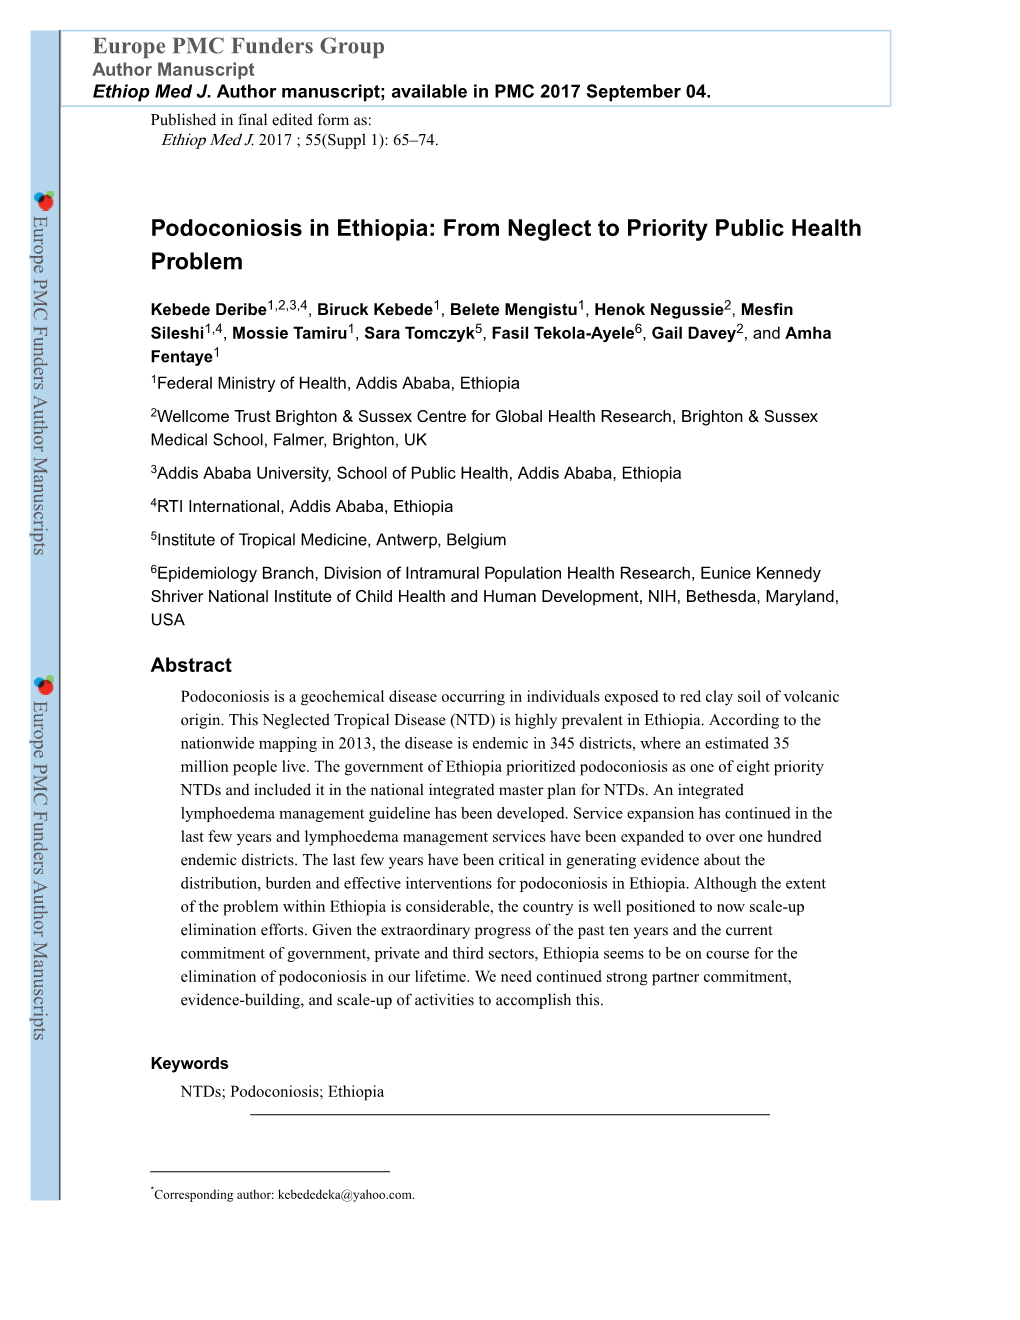 Podoconiosis in Ethiopia: from Neglect to Priority Public Health Problem